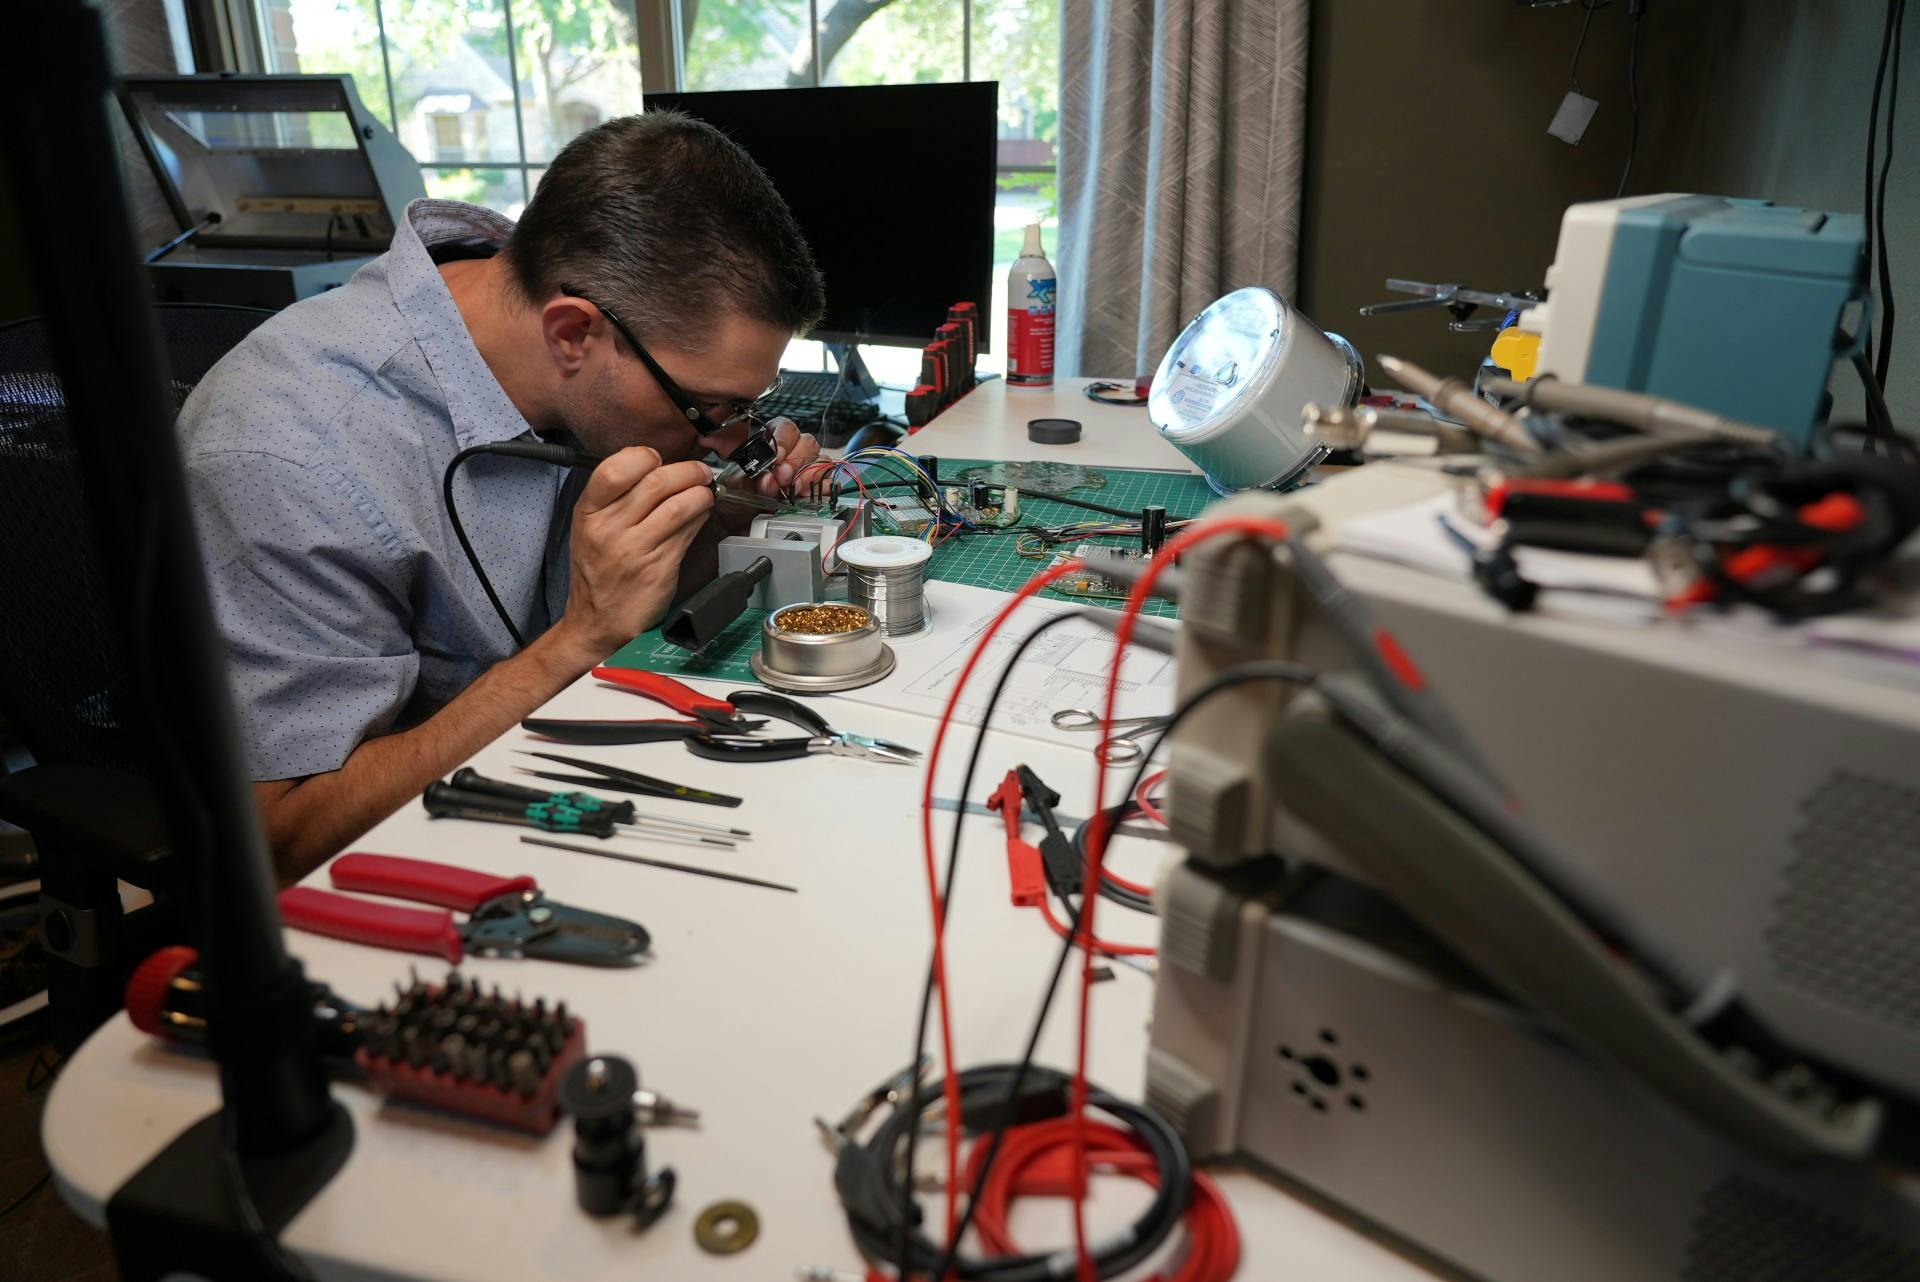 A man soldering at a desk